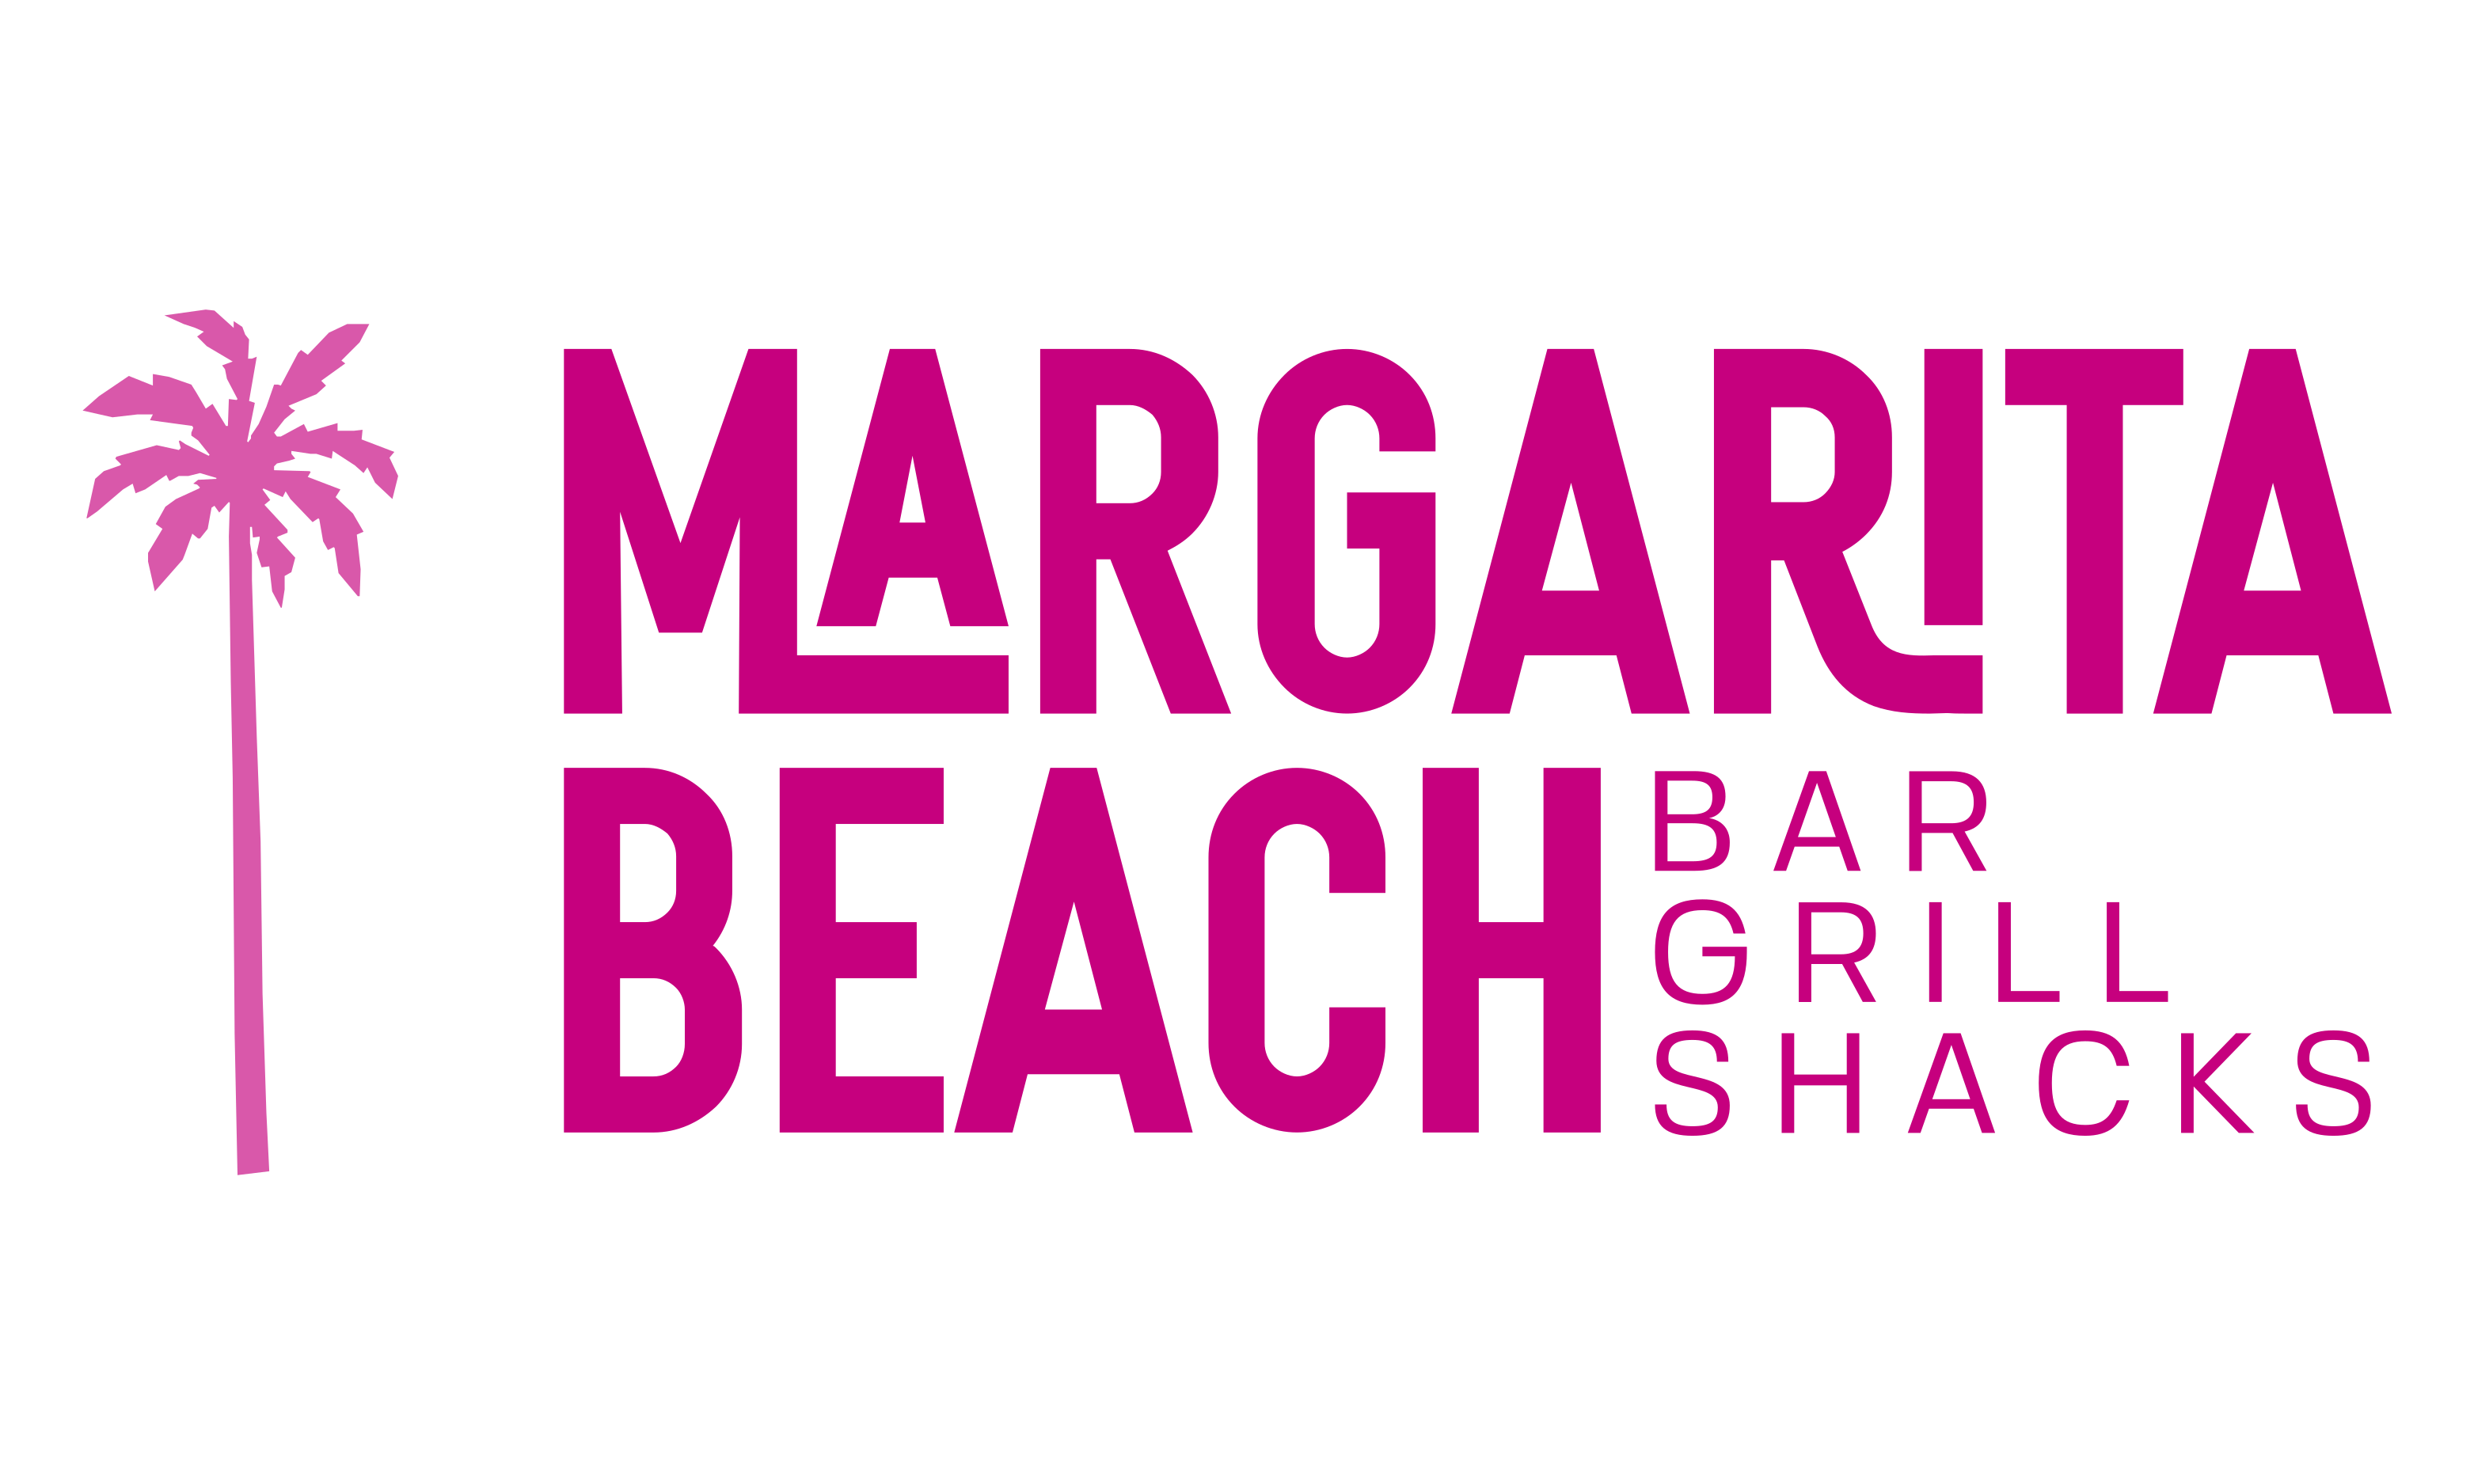 Margarita Beach